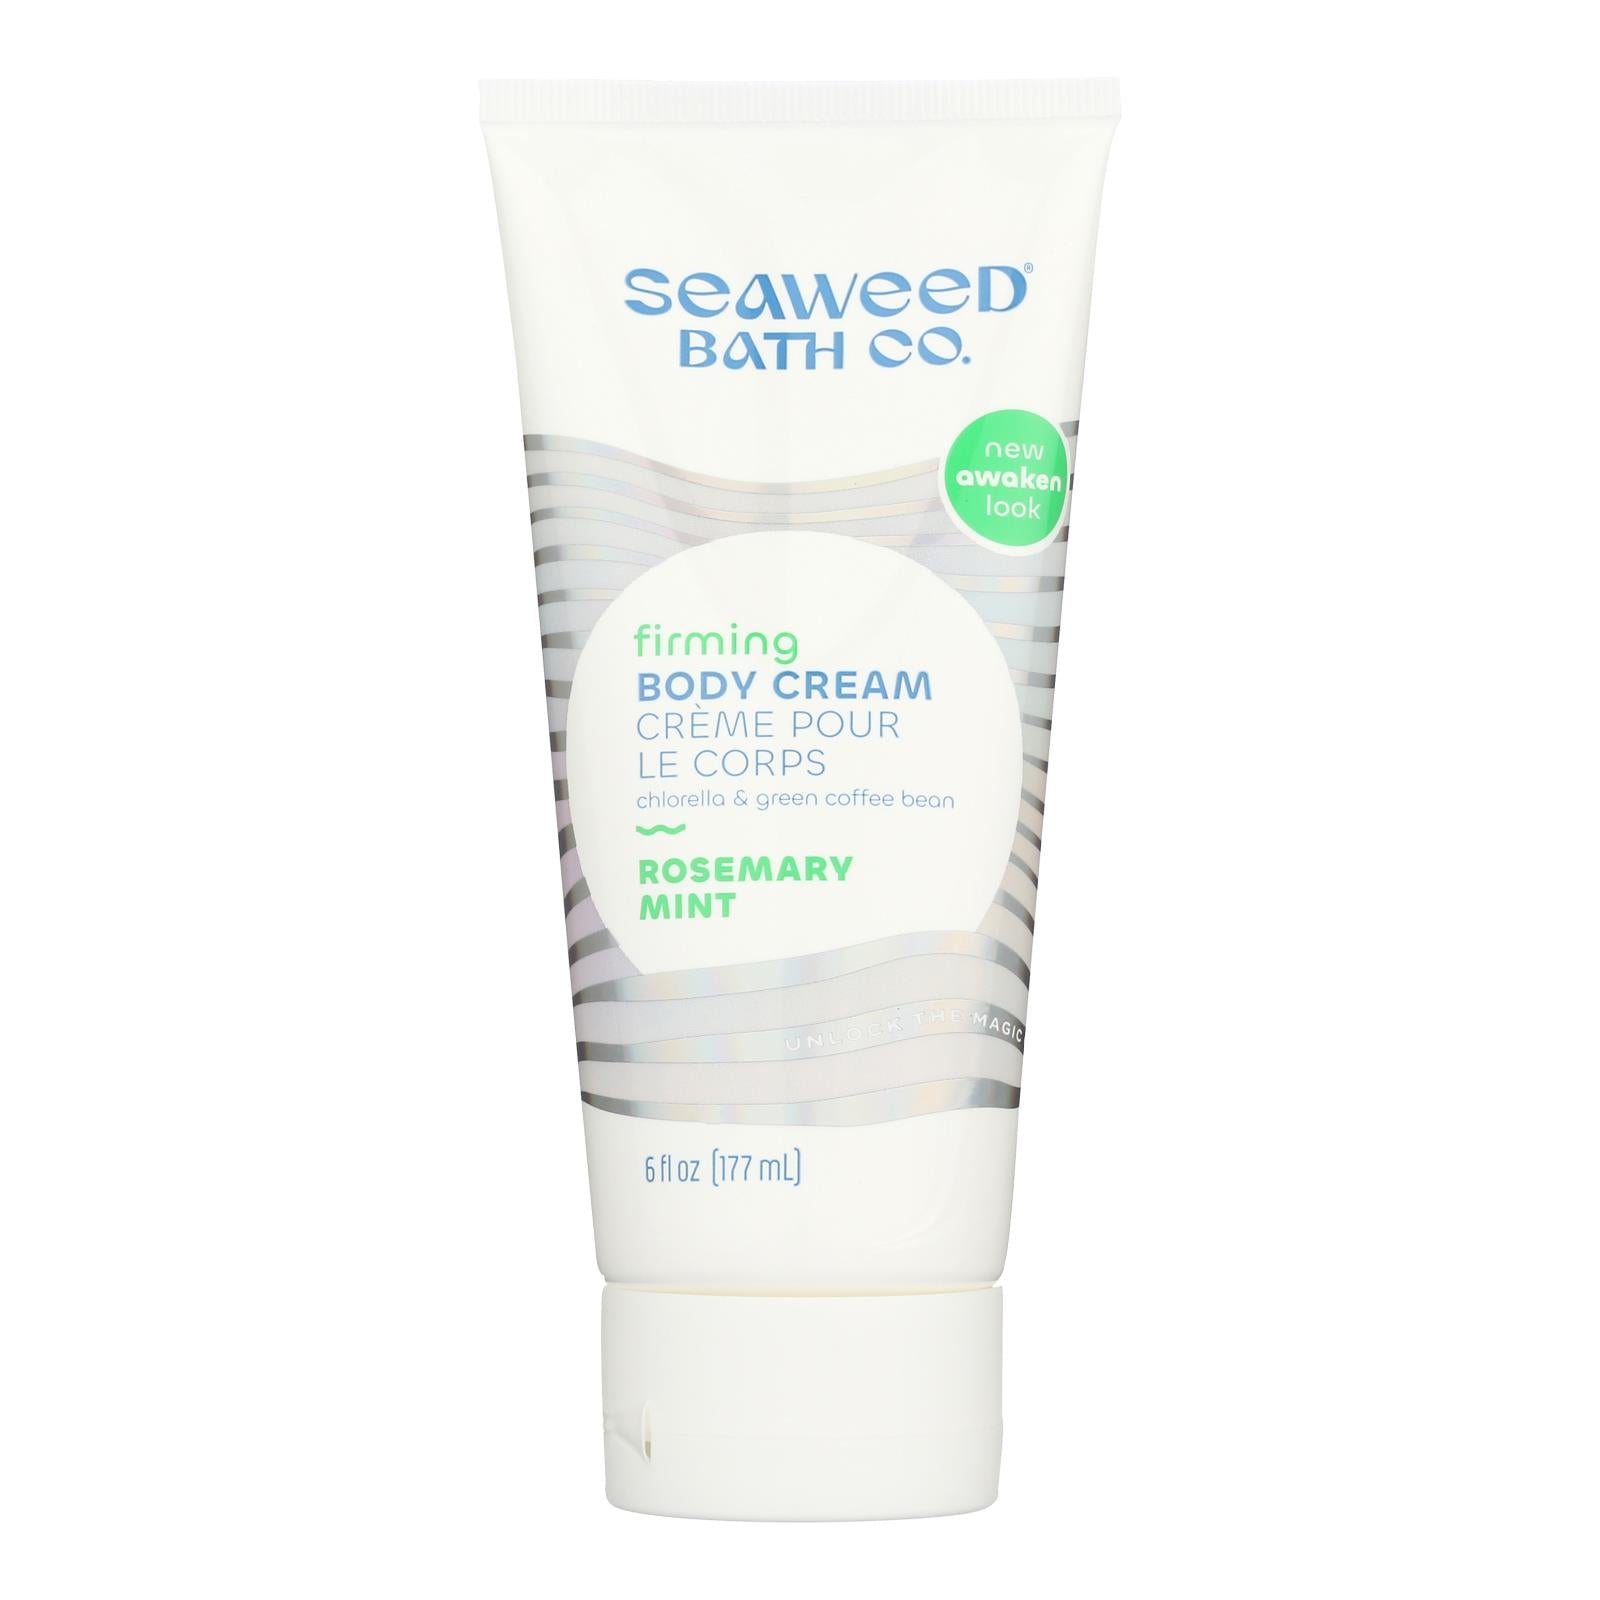 The Seaweed Bath Co Body Cream - Detox - Cellulite - 6 Fl Oz